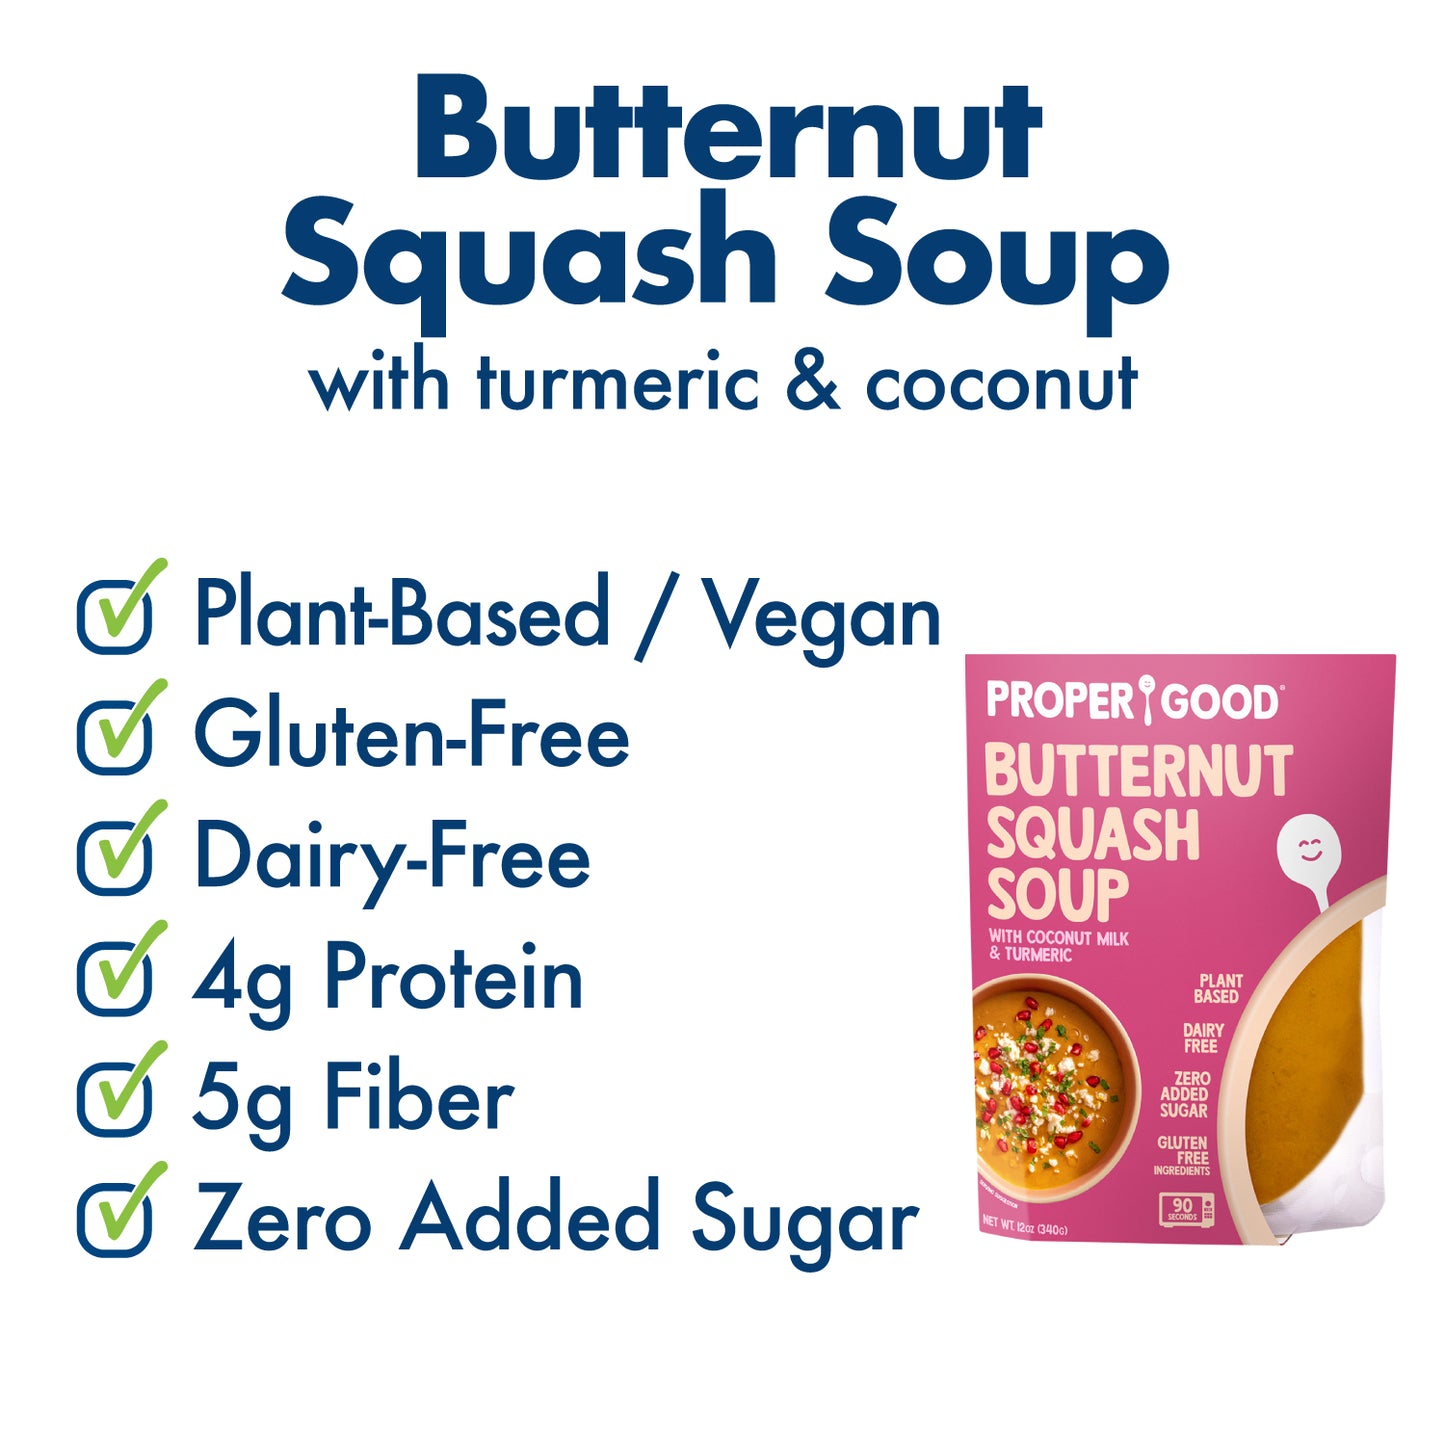 Butternut Squash Soup Benefits - Eat Proper Good